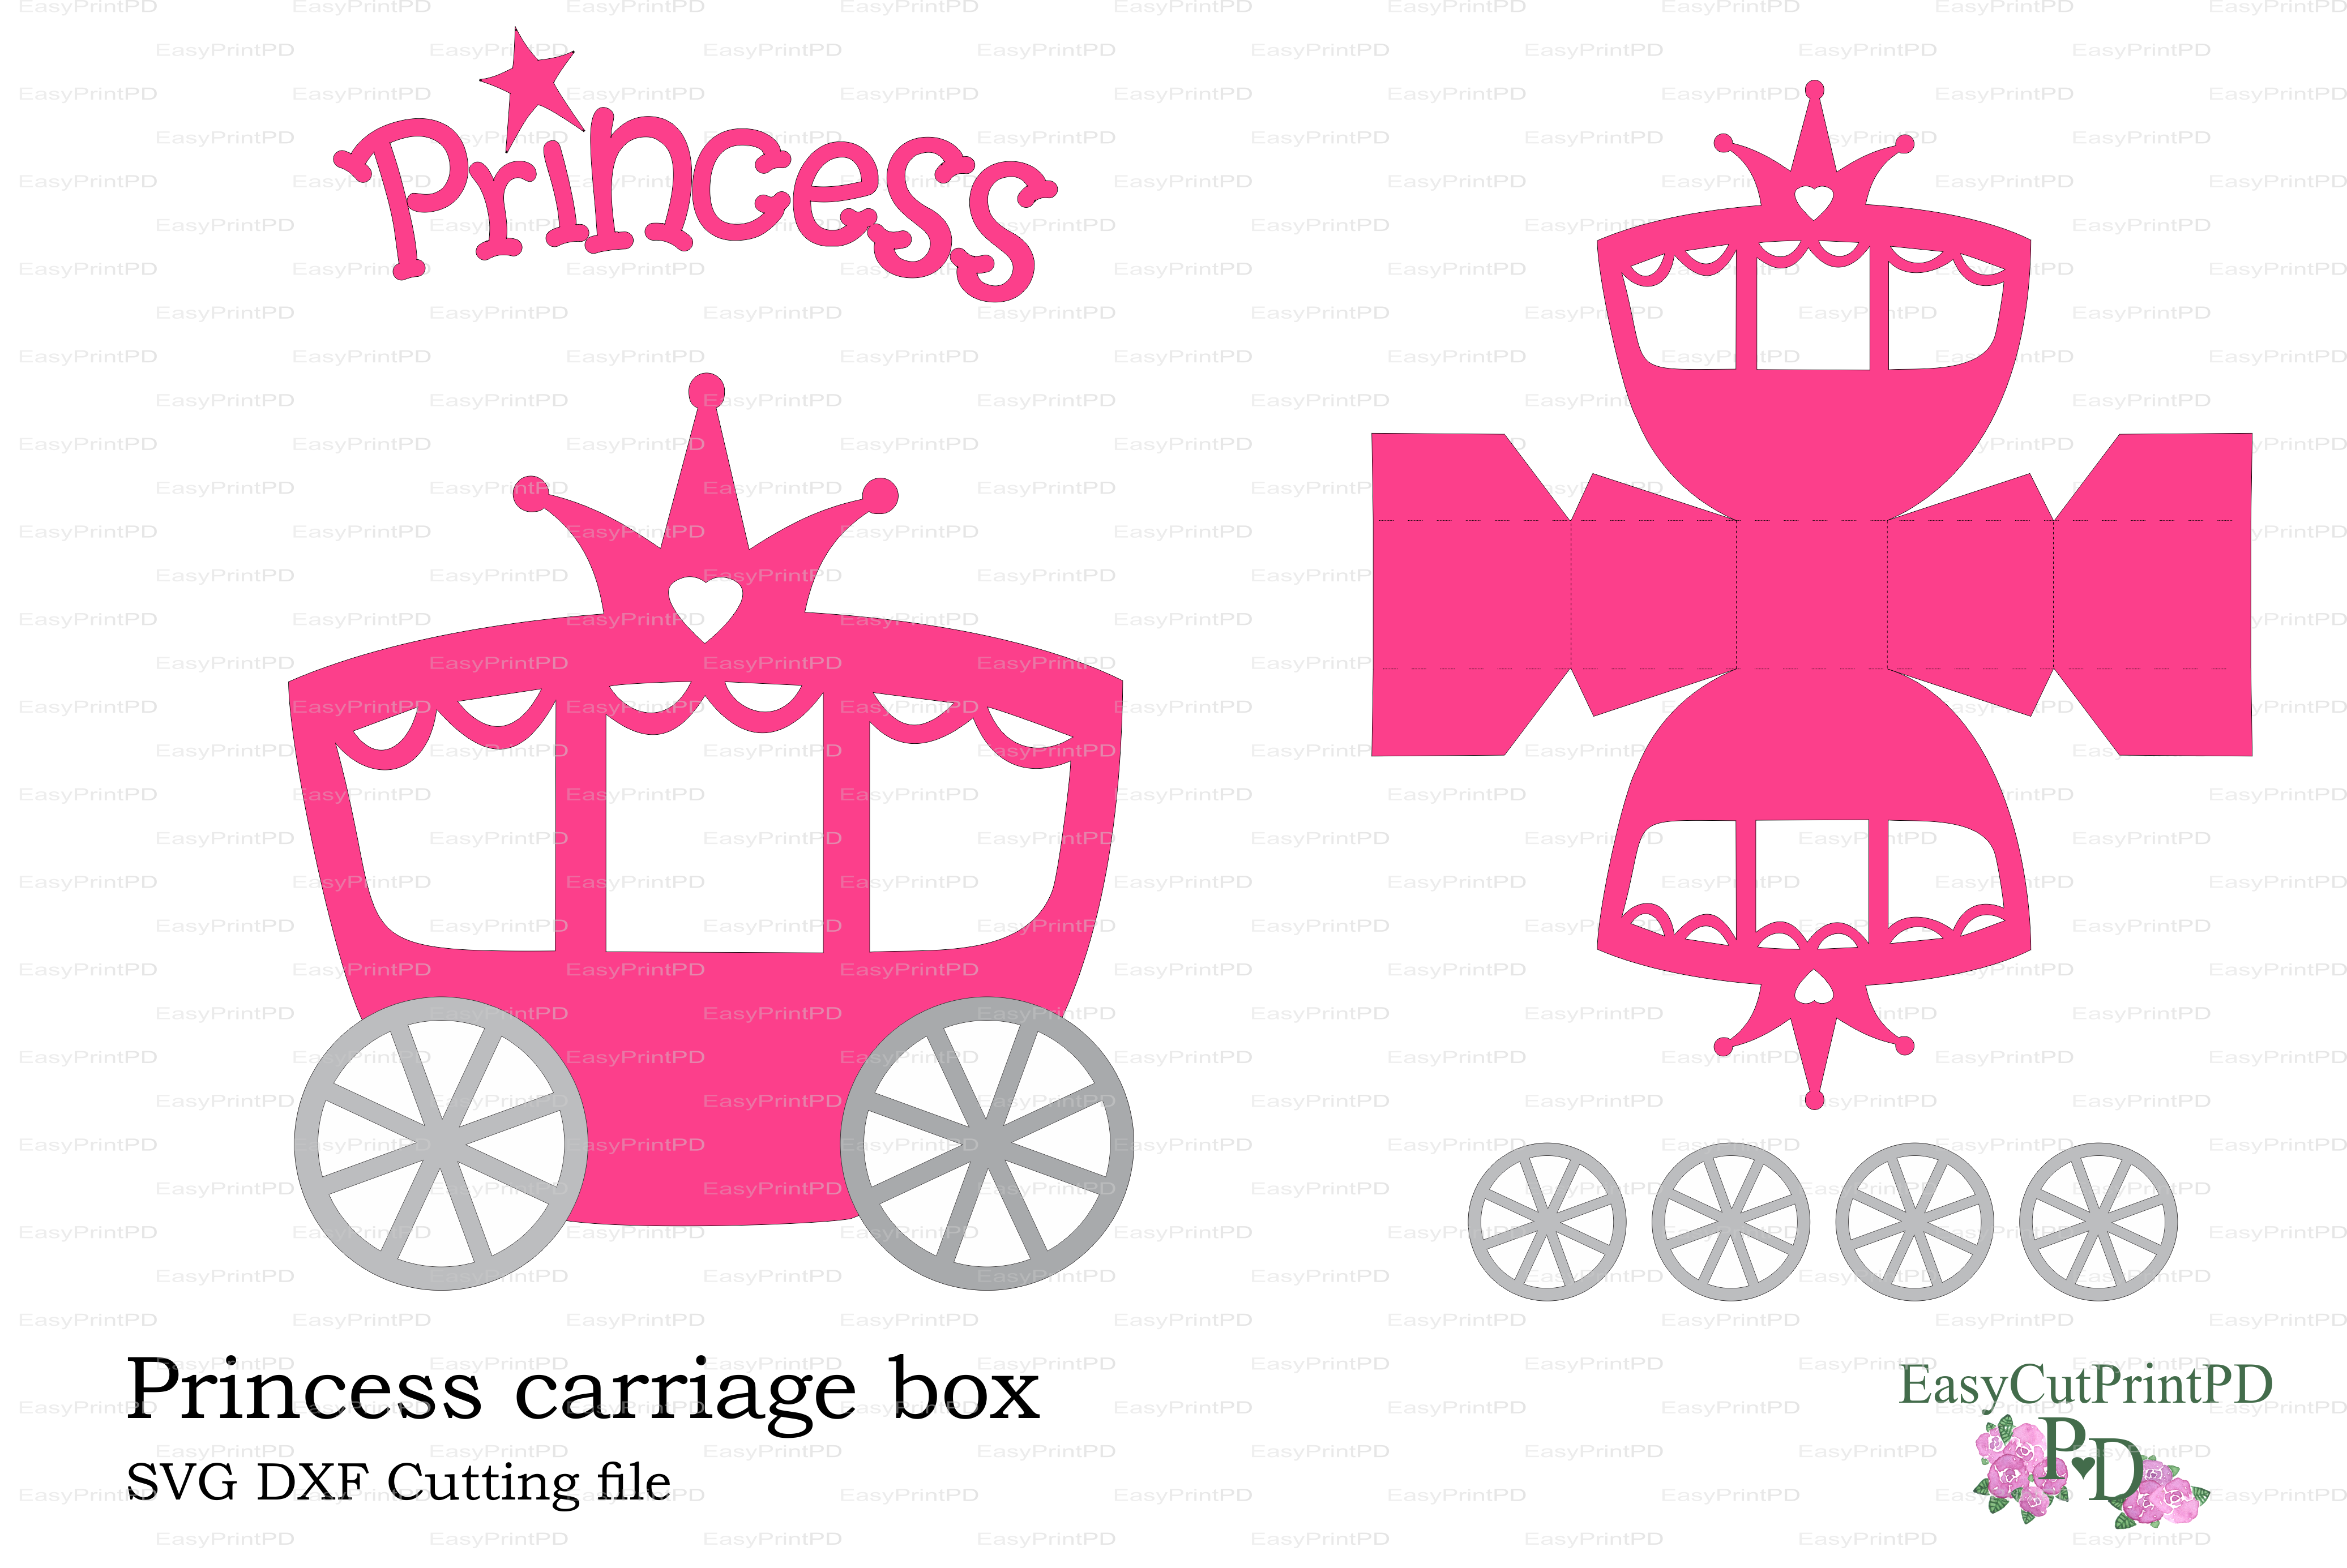 Princess Carriage box template ~ Invitation Templates on ...